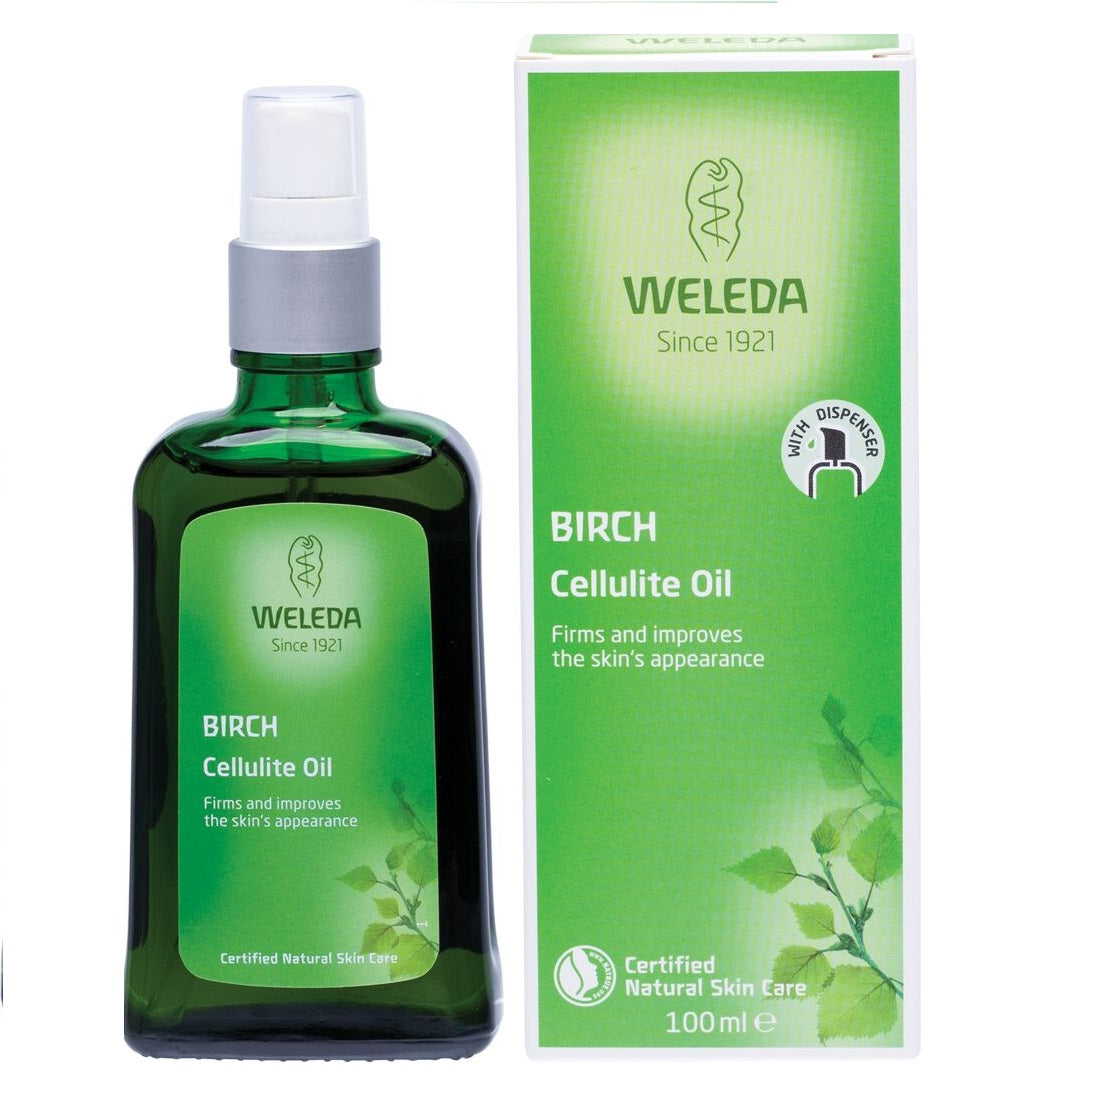 Weleda Birch Cellulite Oil 100ml - Natural Treatment for Cellulite